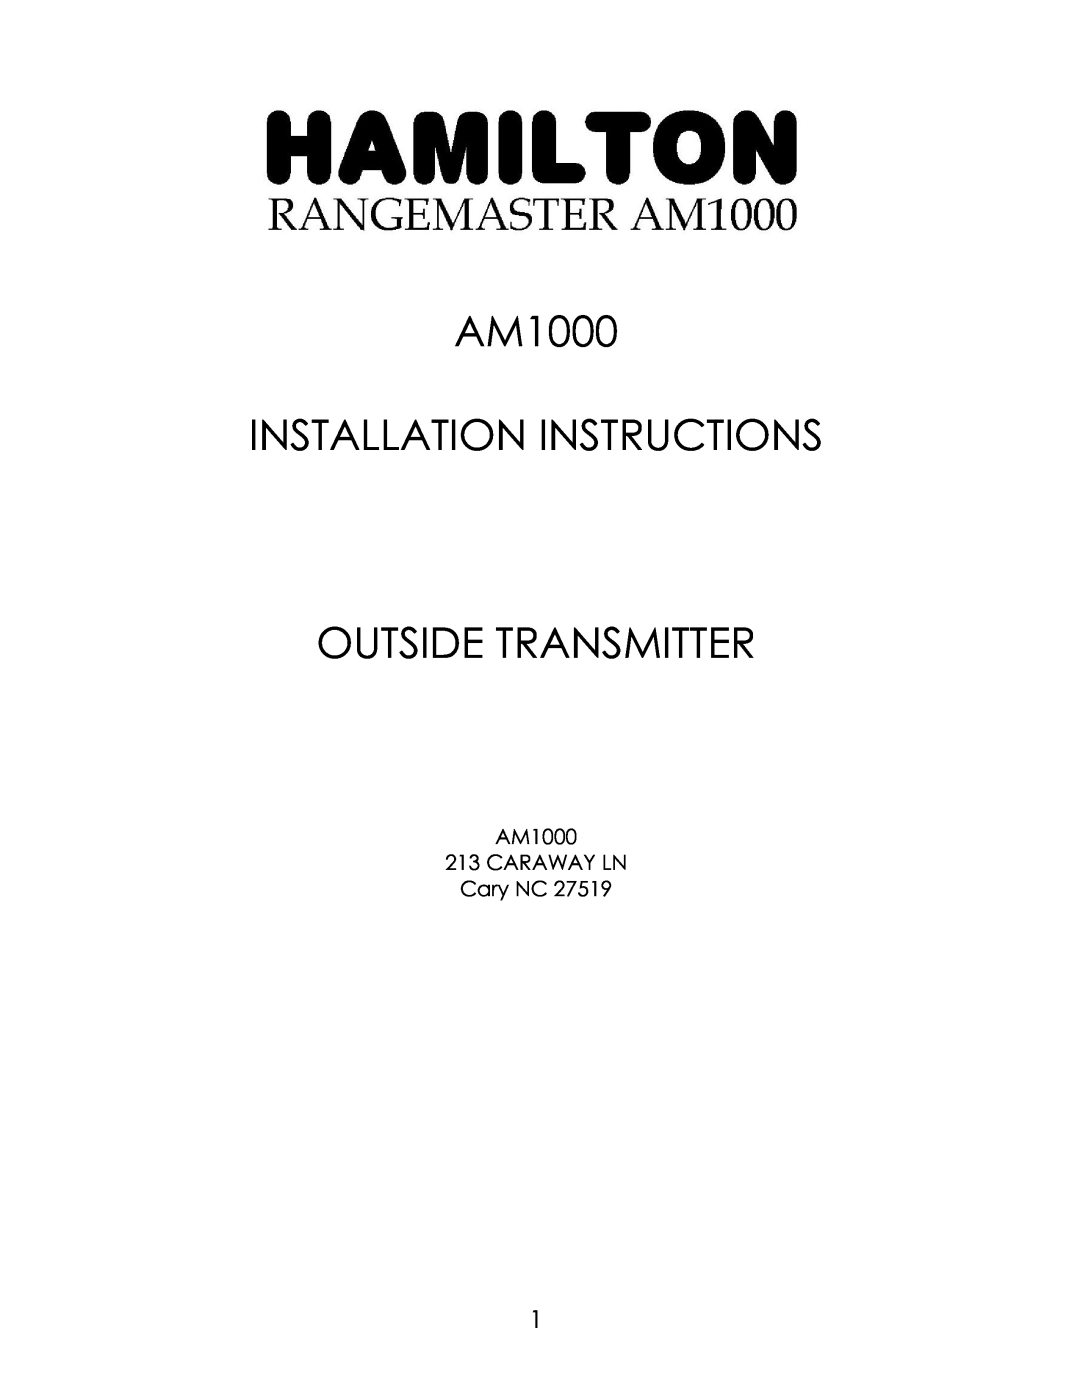 Hamilton Electronics installation instructions AM1000 INSTALLATION INSTRUCTIONS, Outside Transmitter 